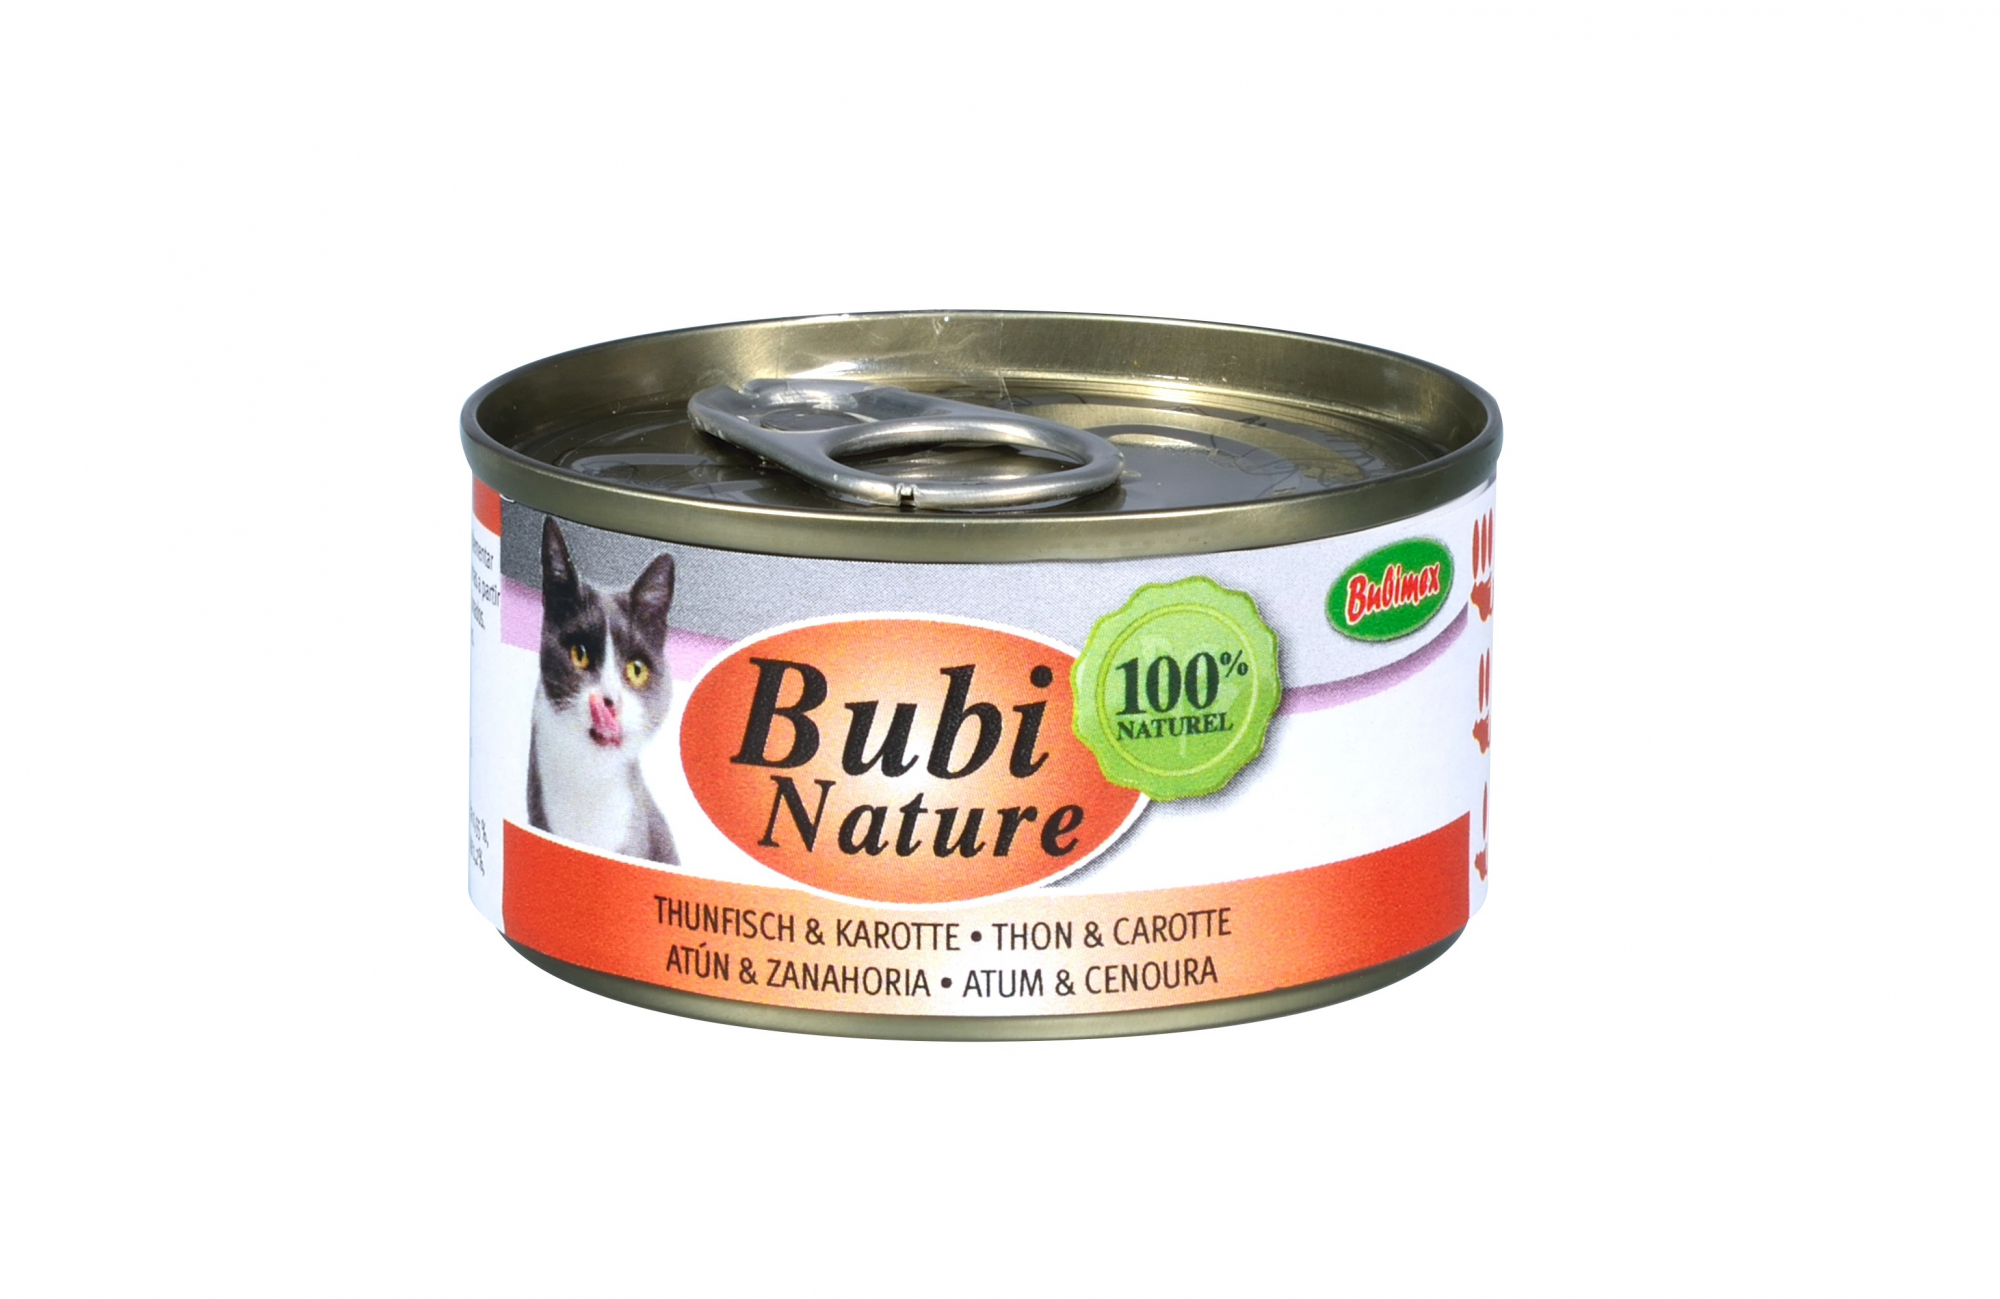 BUBIMEX Bubi nature Comida húmeda para gatos Atún y Zanahorias